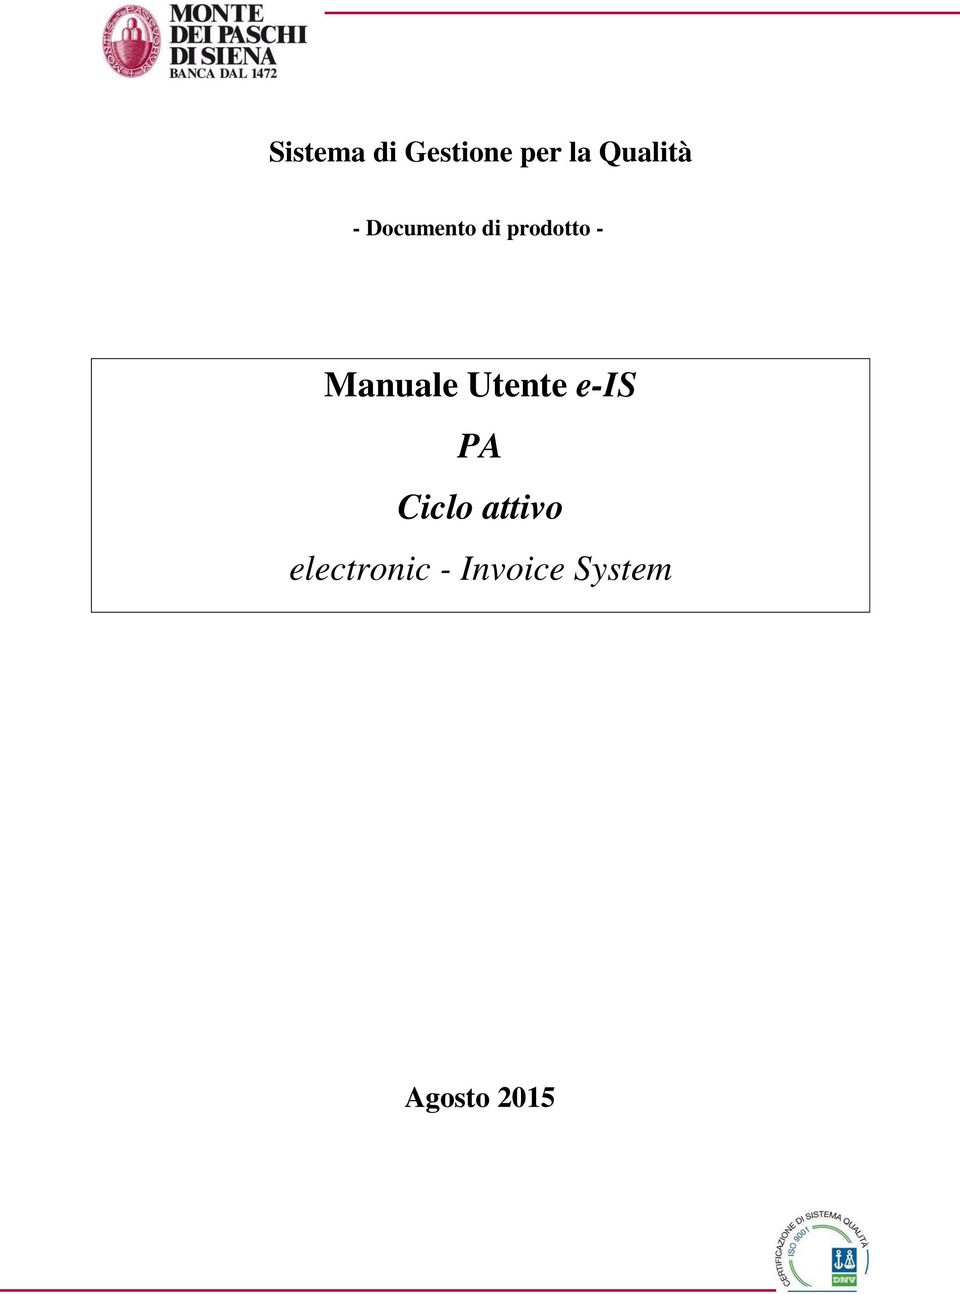 Manuale Utente e-is PA Ciclo